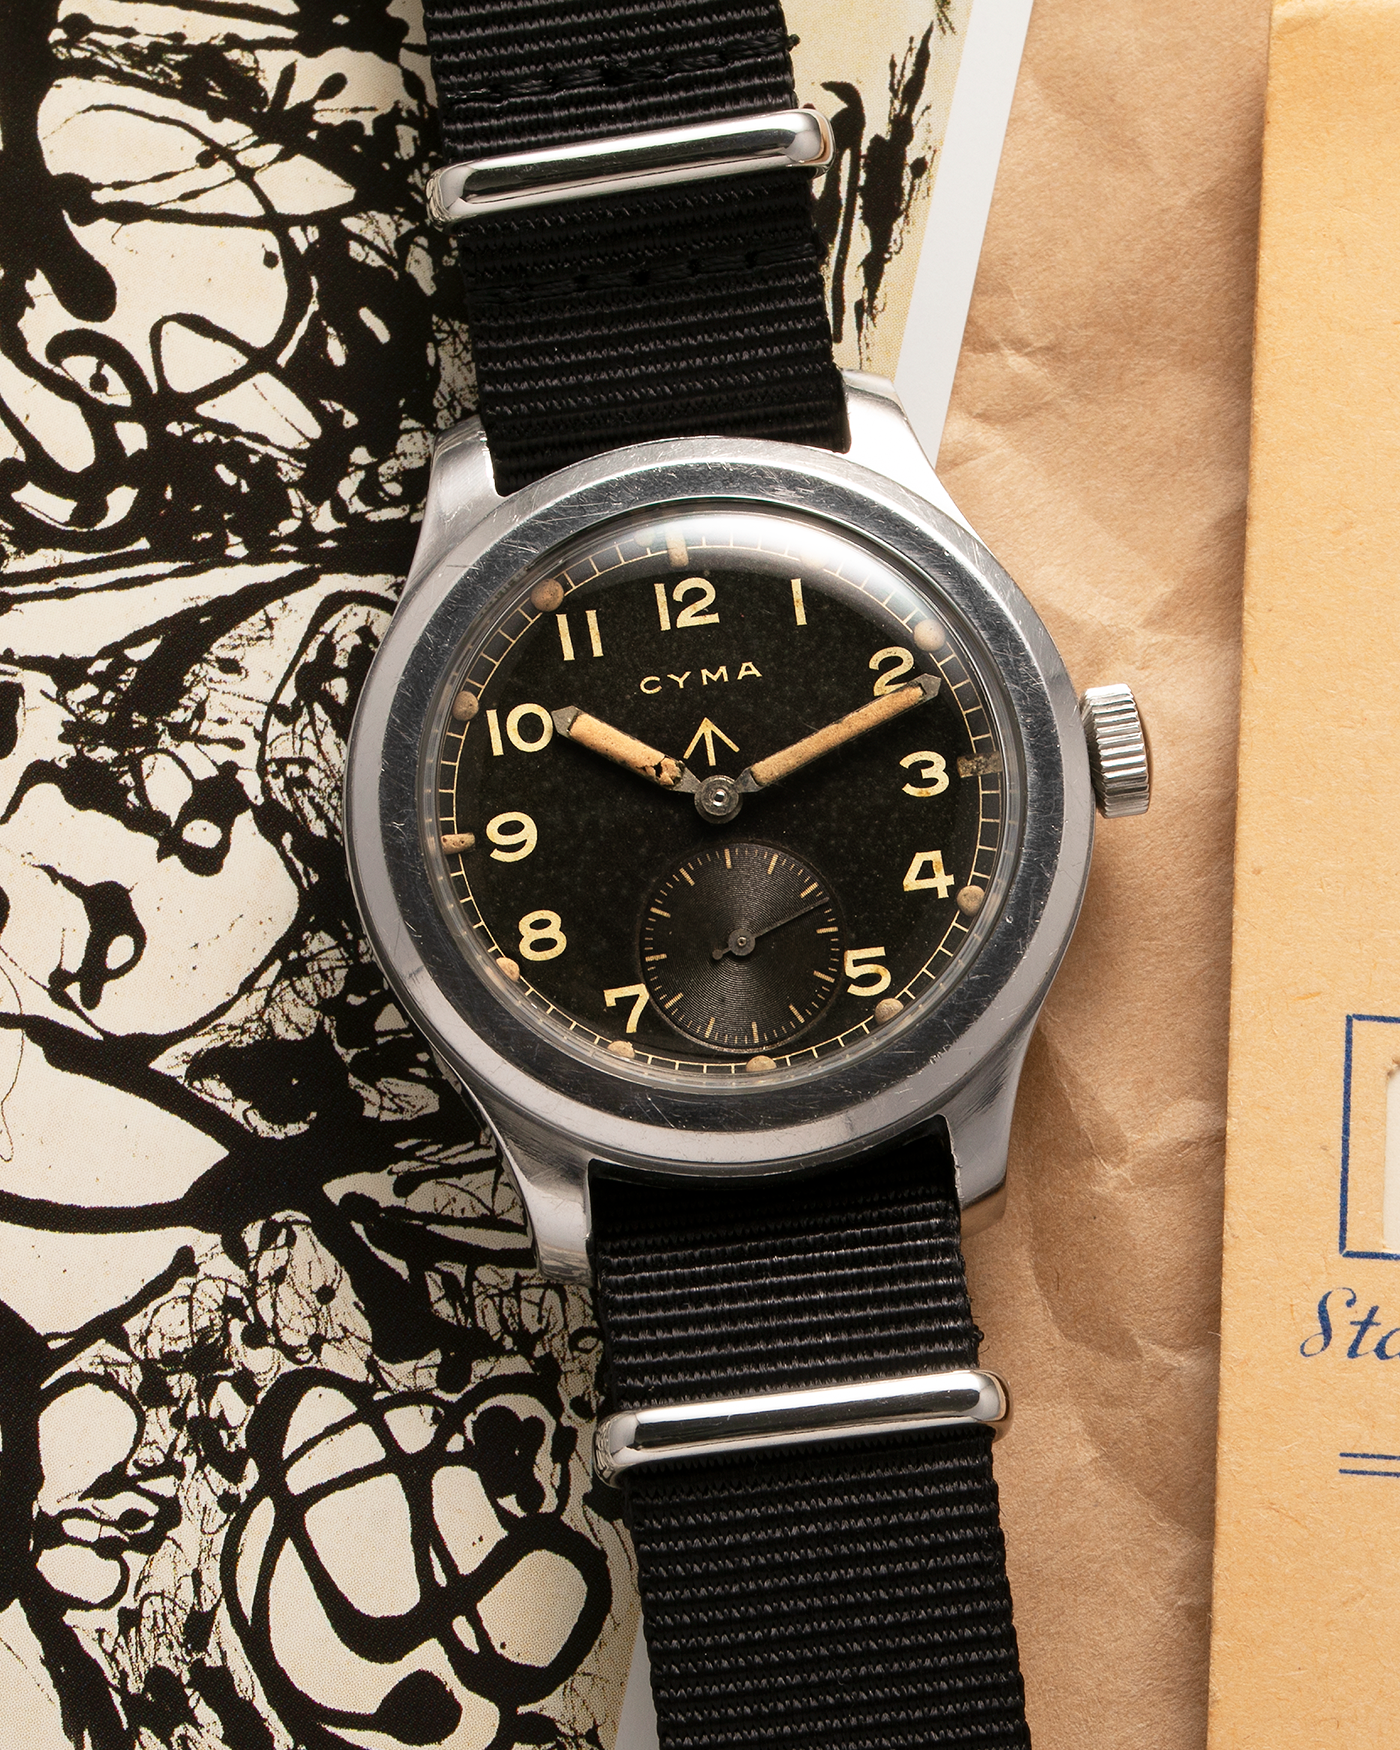 Brand: Cyma Year: 1940s Model: W.W.W. (Watch, Wristlet, Waterproof) Material: Stainless Steel Movement: Cyma Cal. 234, Manual-Winding Case Diameter: 38mm Lug Width: 18mm Strap: Generic Black Fabric NATO strap